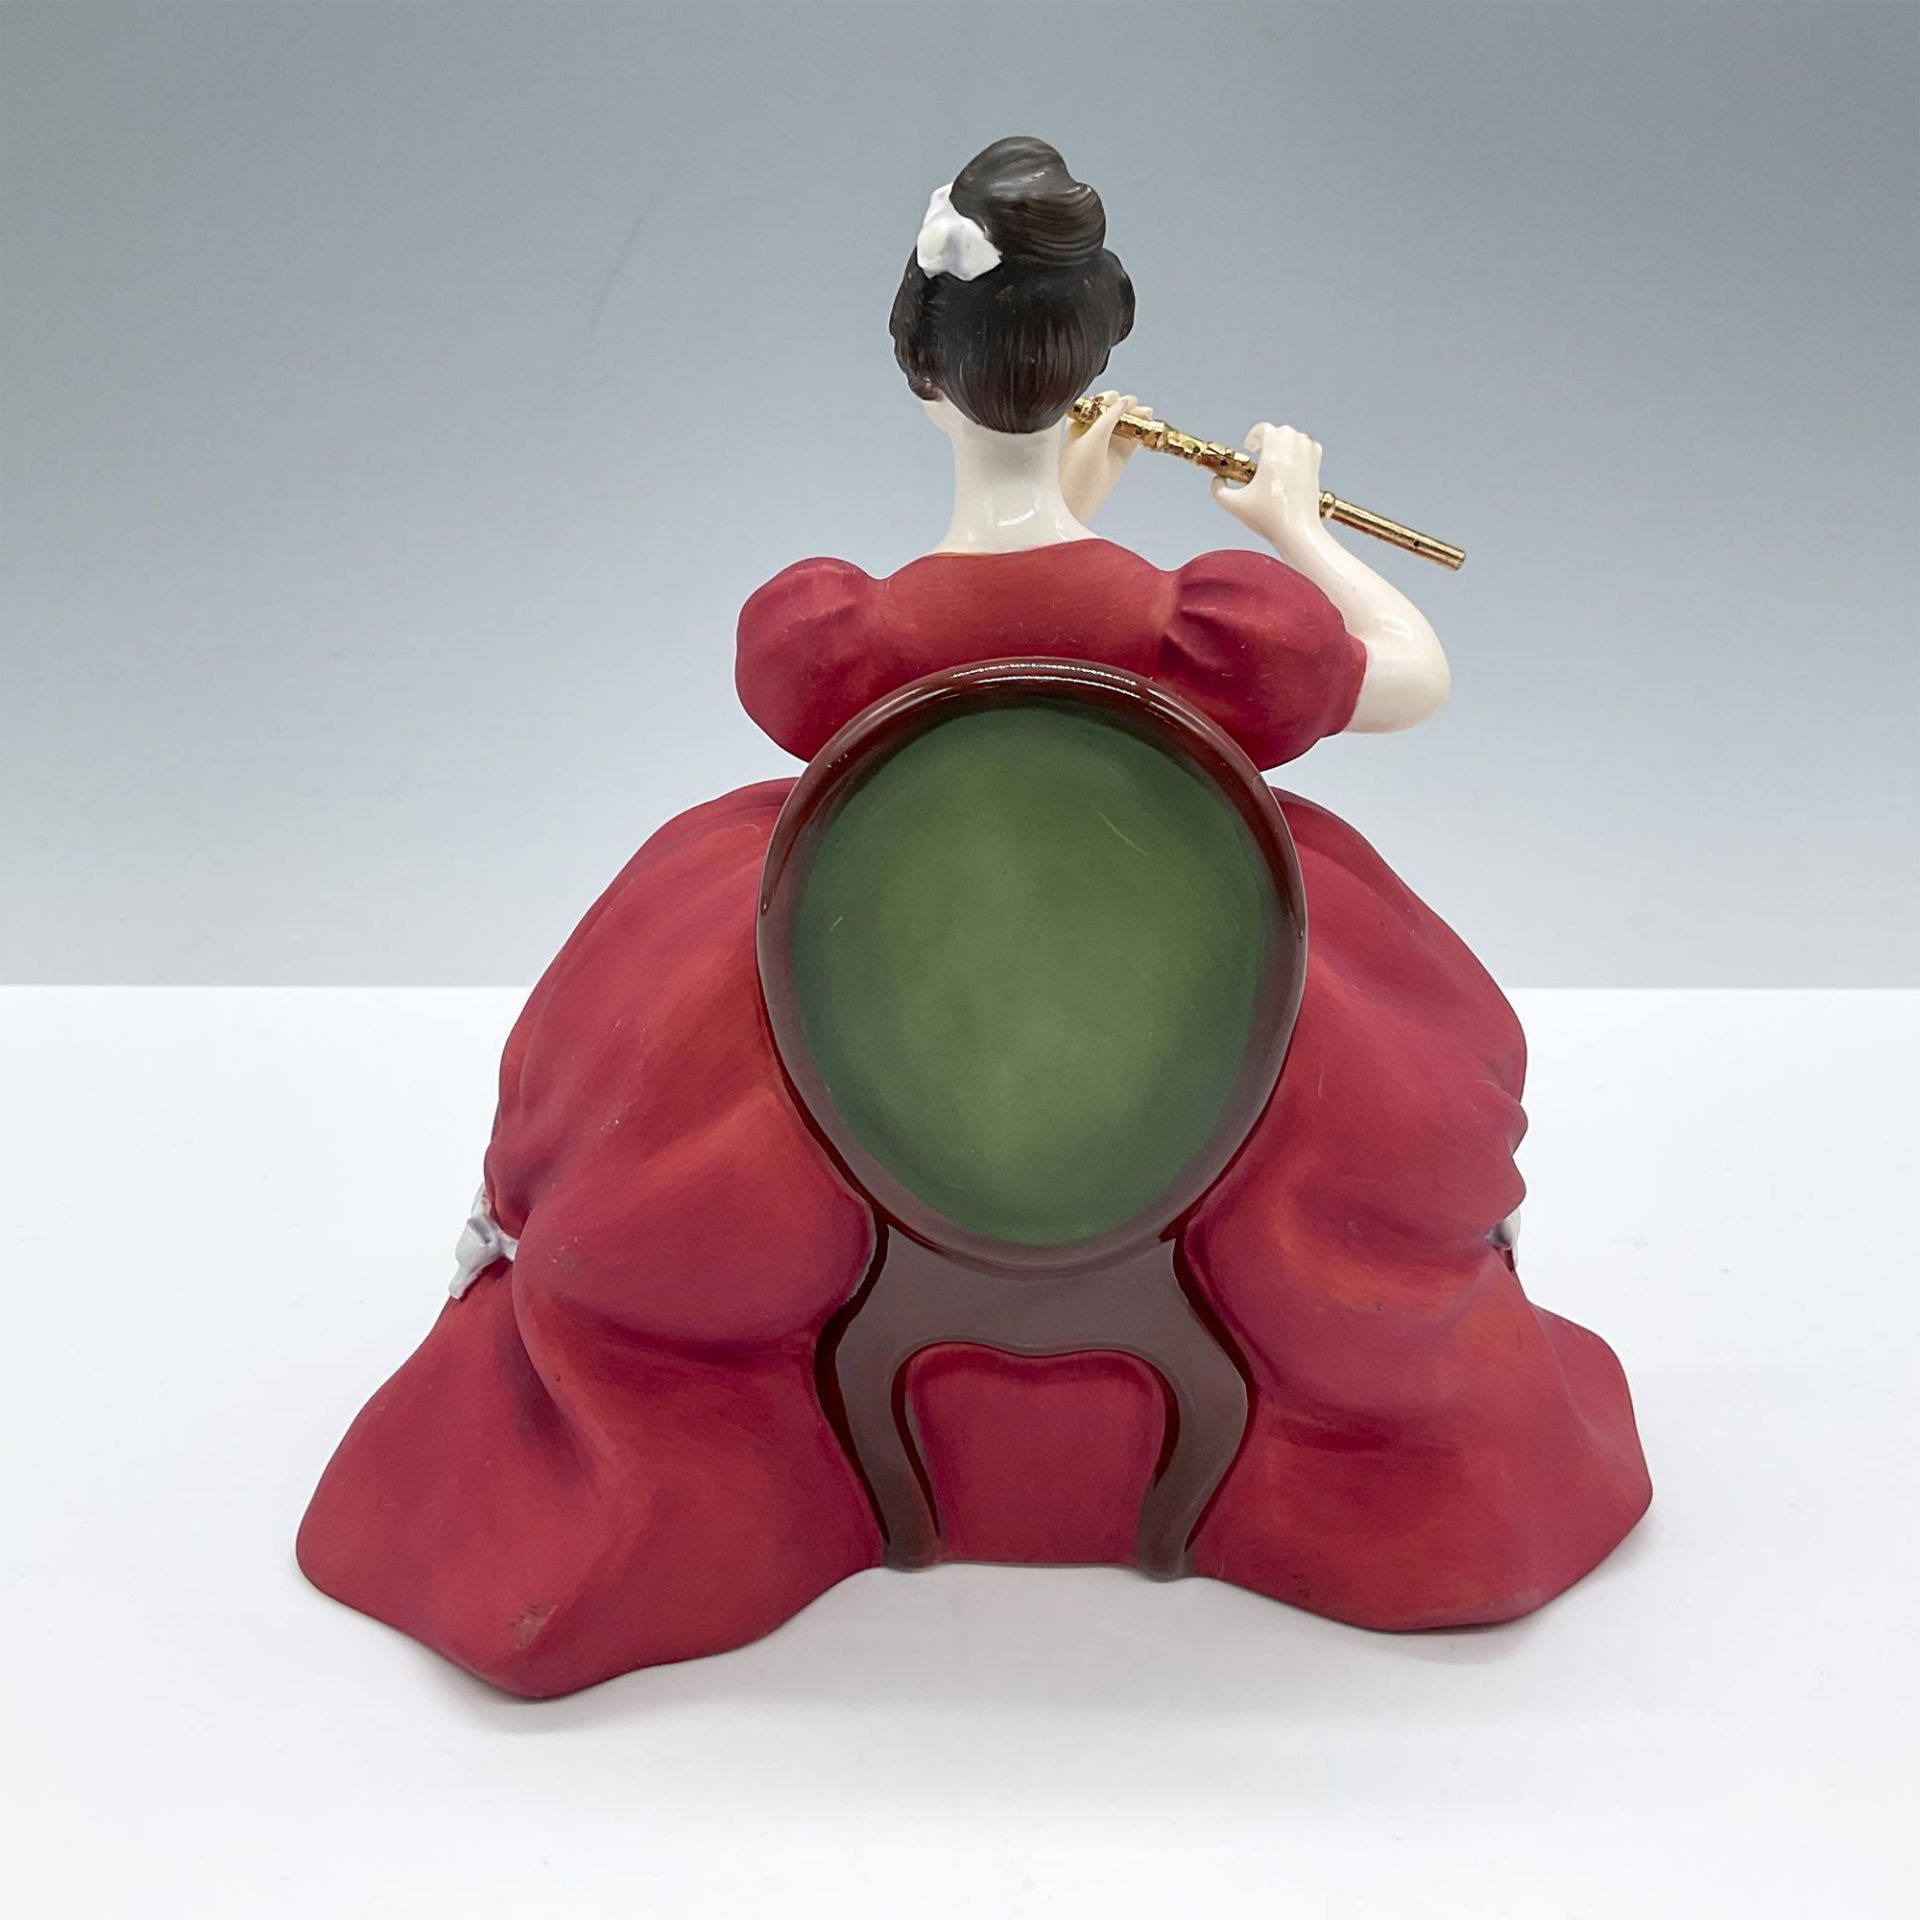 Flute - HN2483 - Royal Doulton Figurine - Image 2 of 3